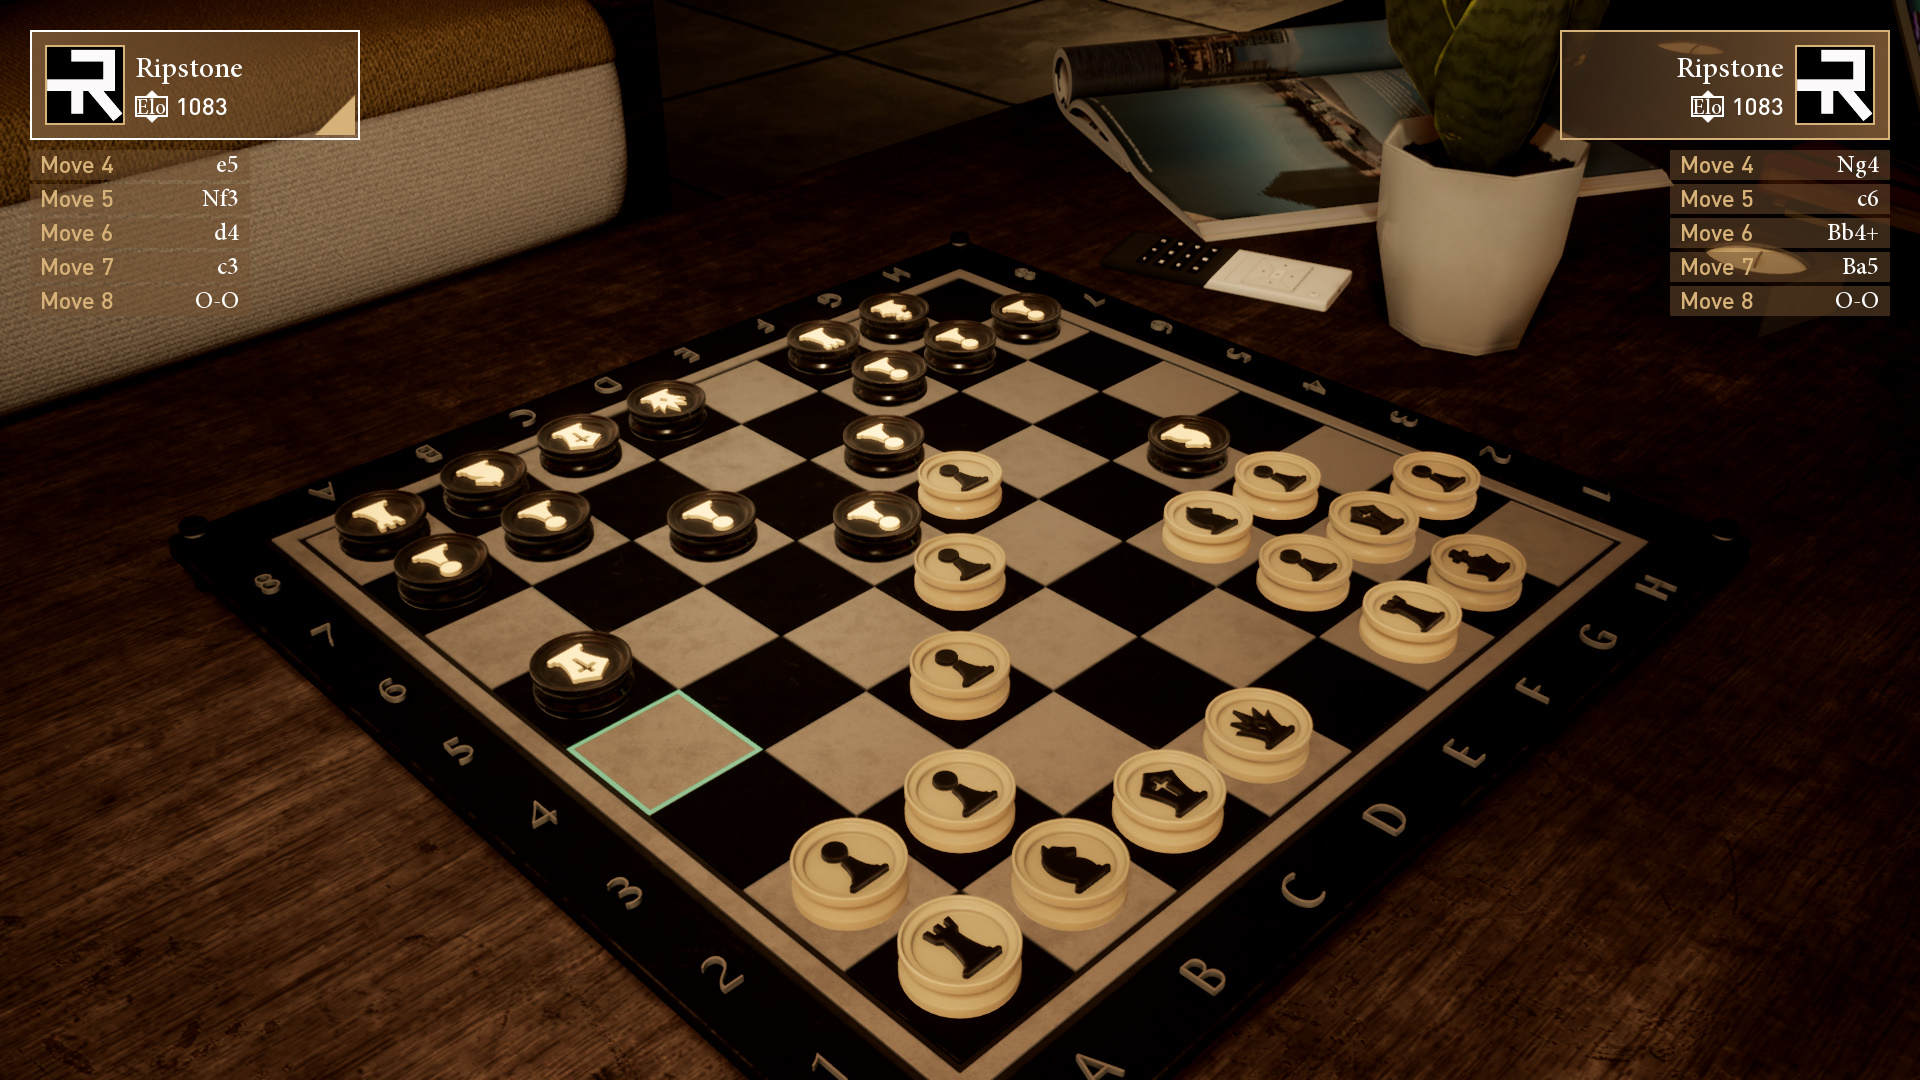 Buy Chess Ultra, PC - Steam